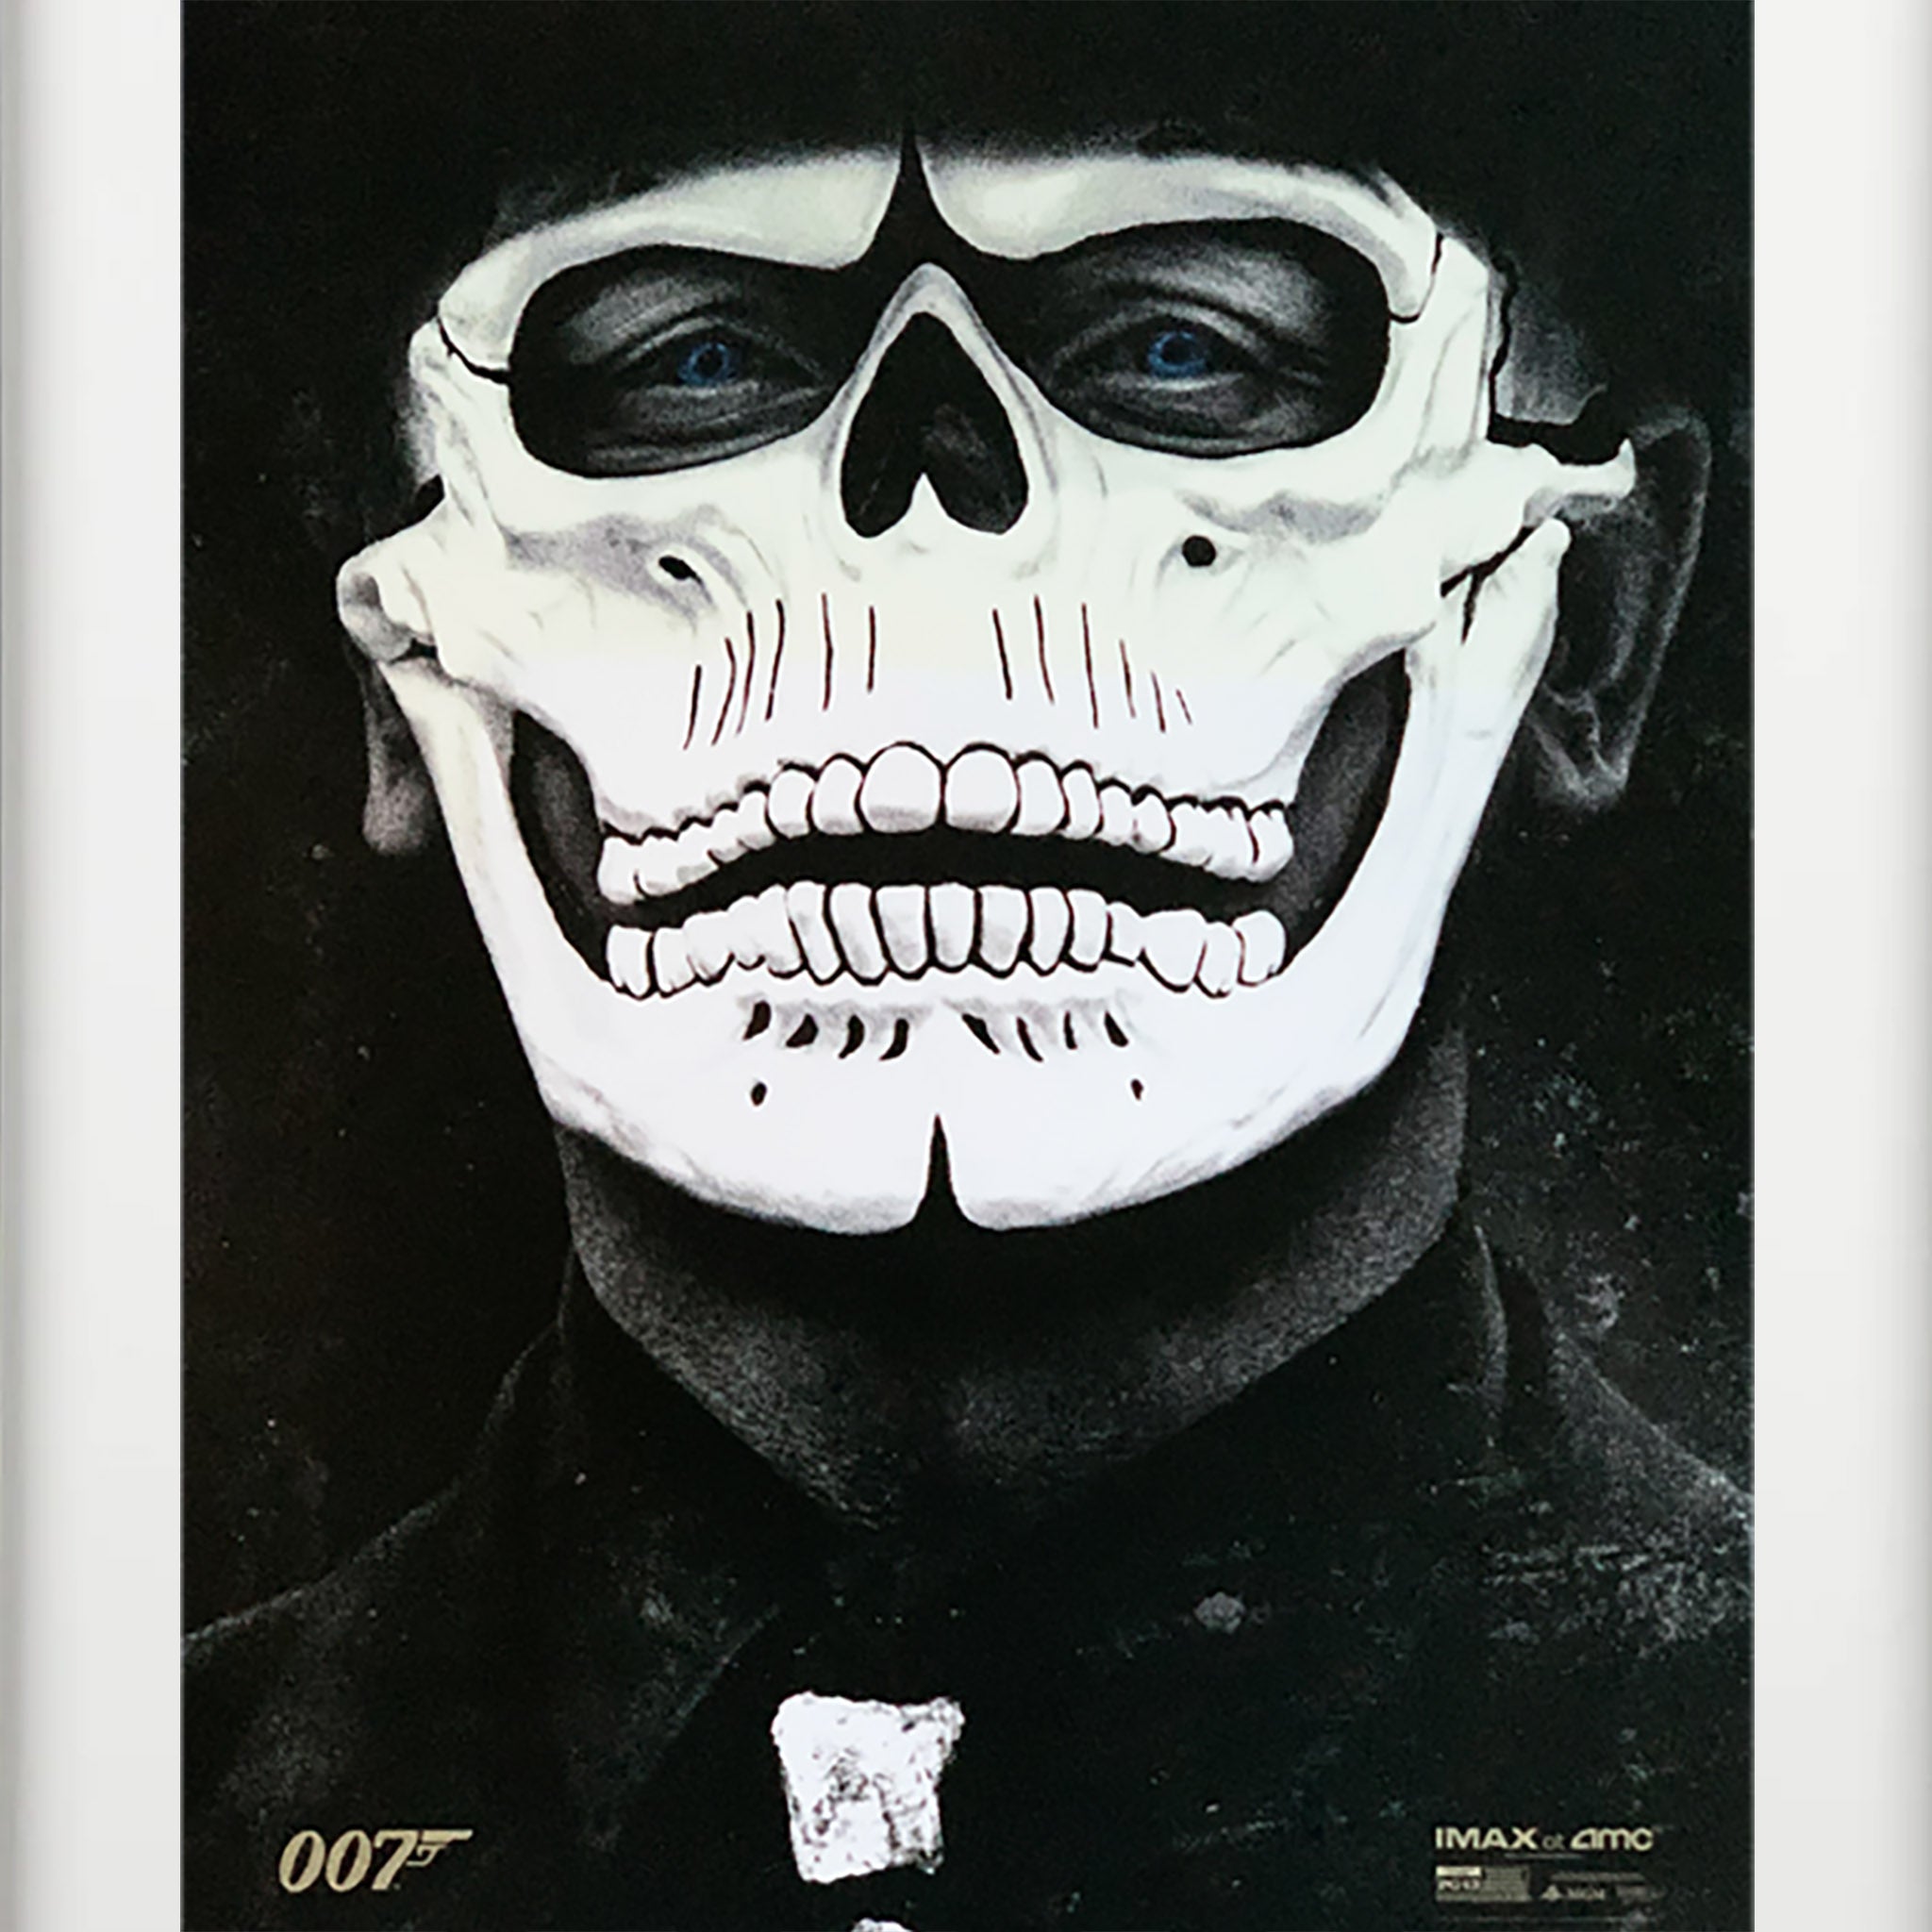 Framed 007 Spectre James Bond Original Film Poster